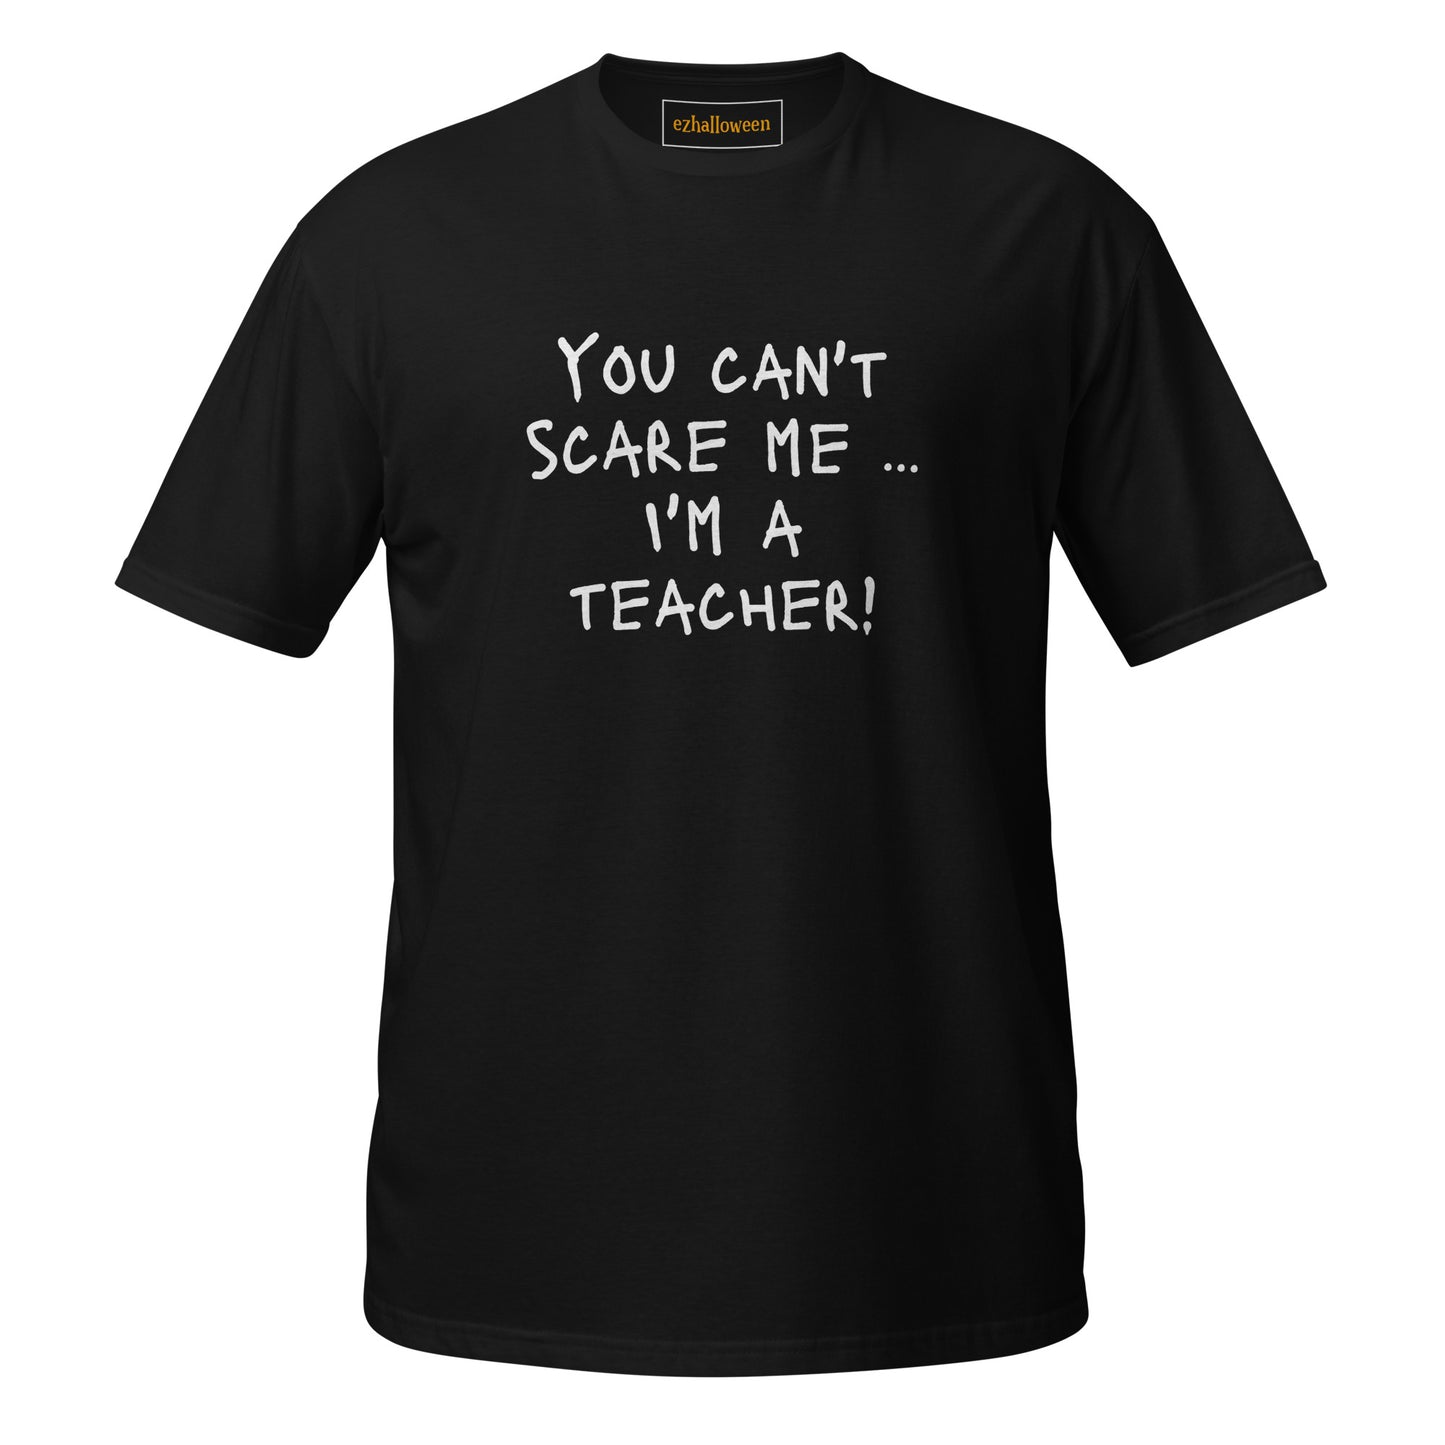 You Can't Scare Me, I'm A Teacher! Halloween T-shirt for Teachers. Unisex